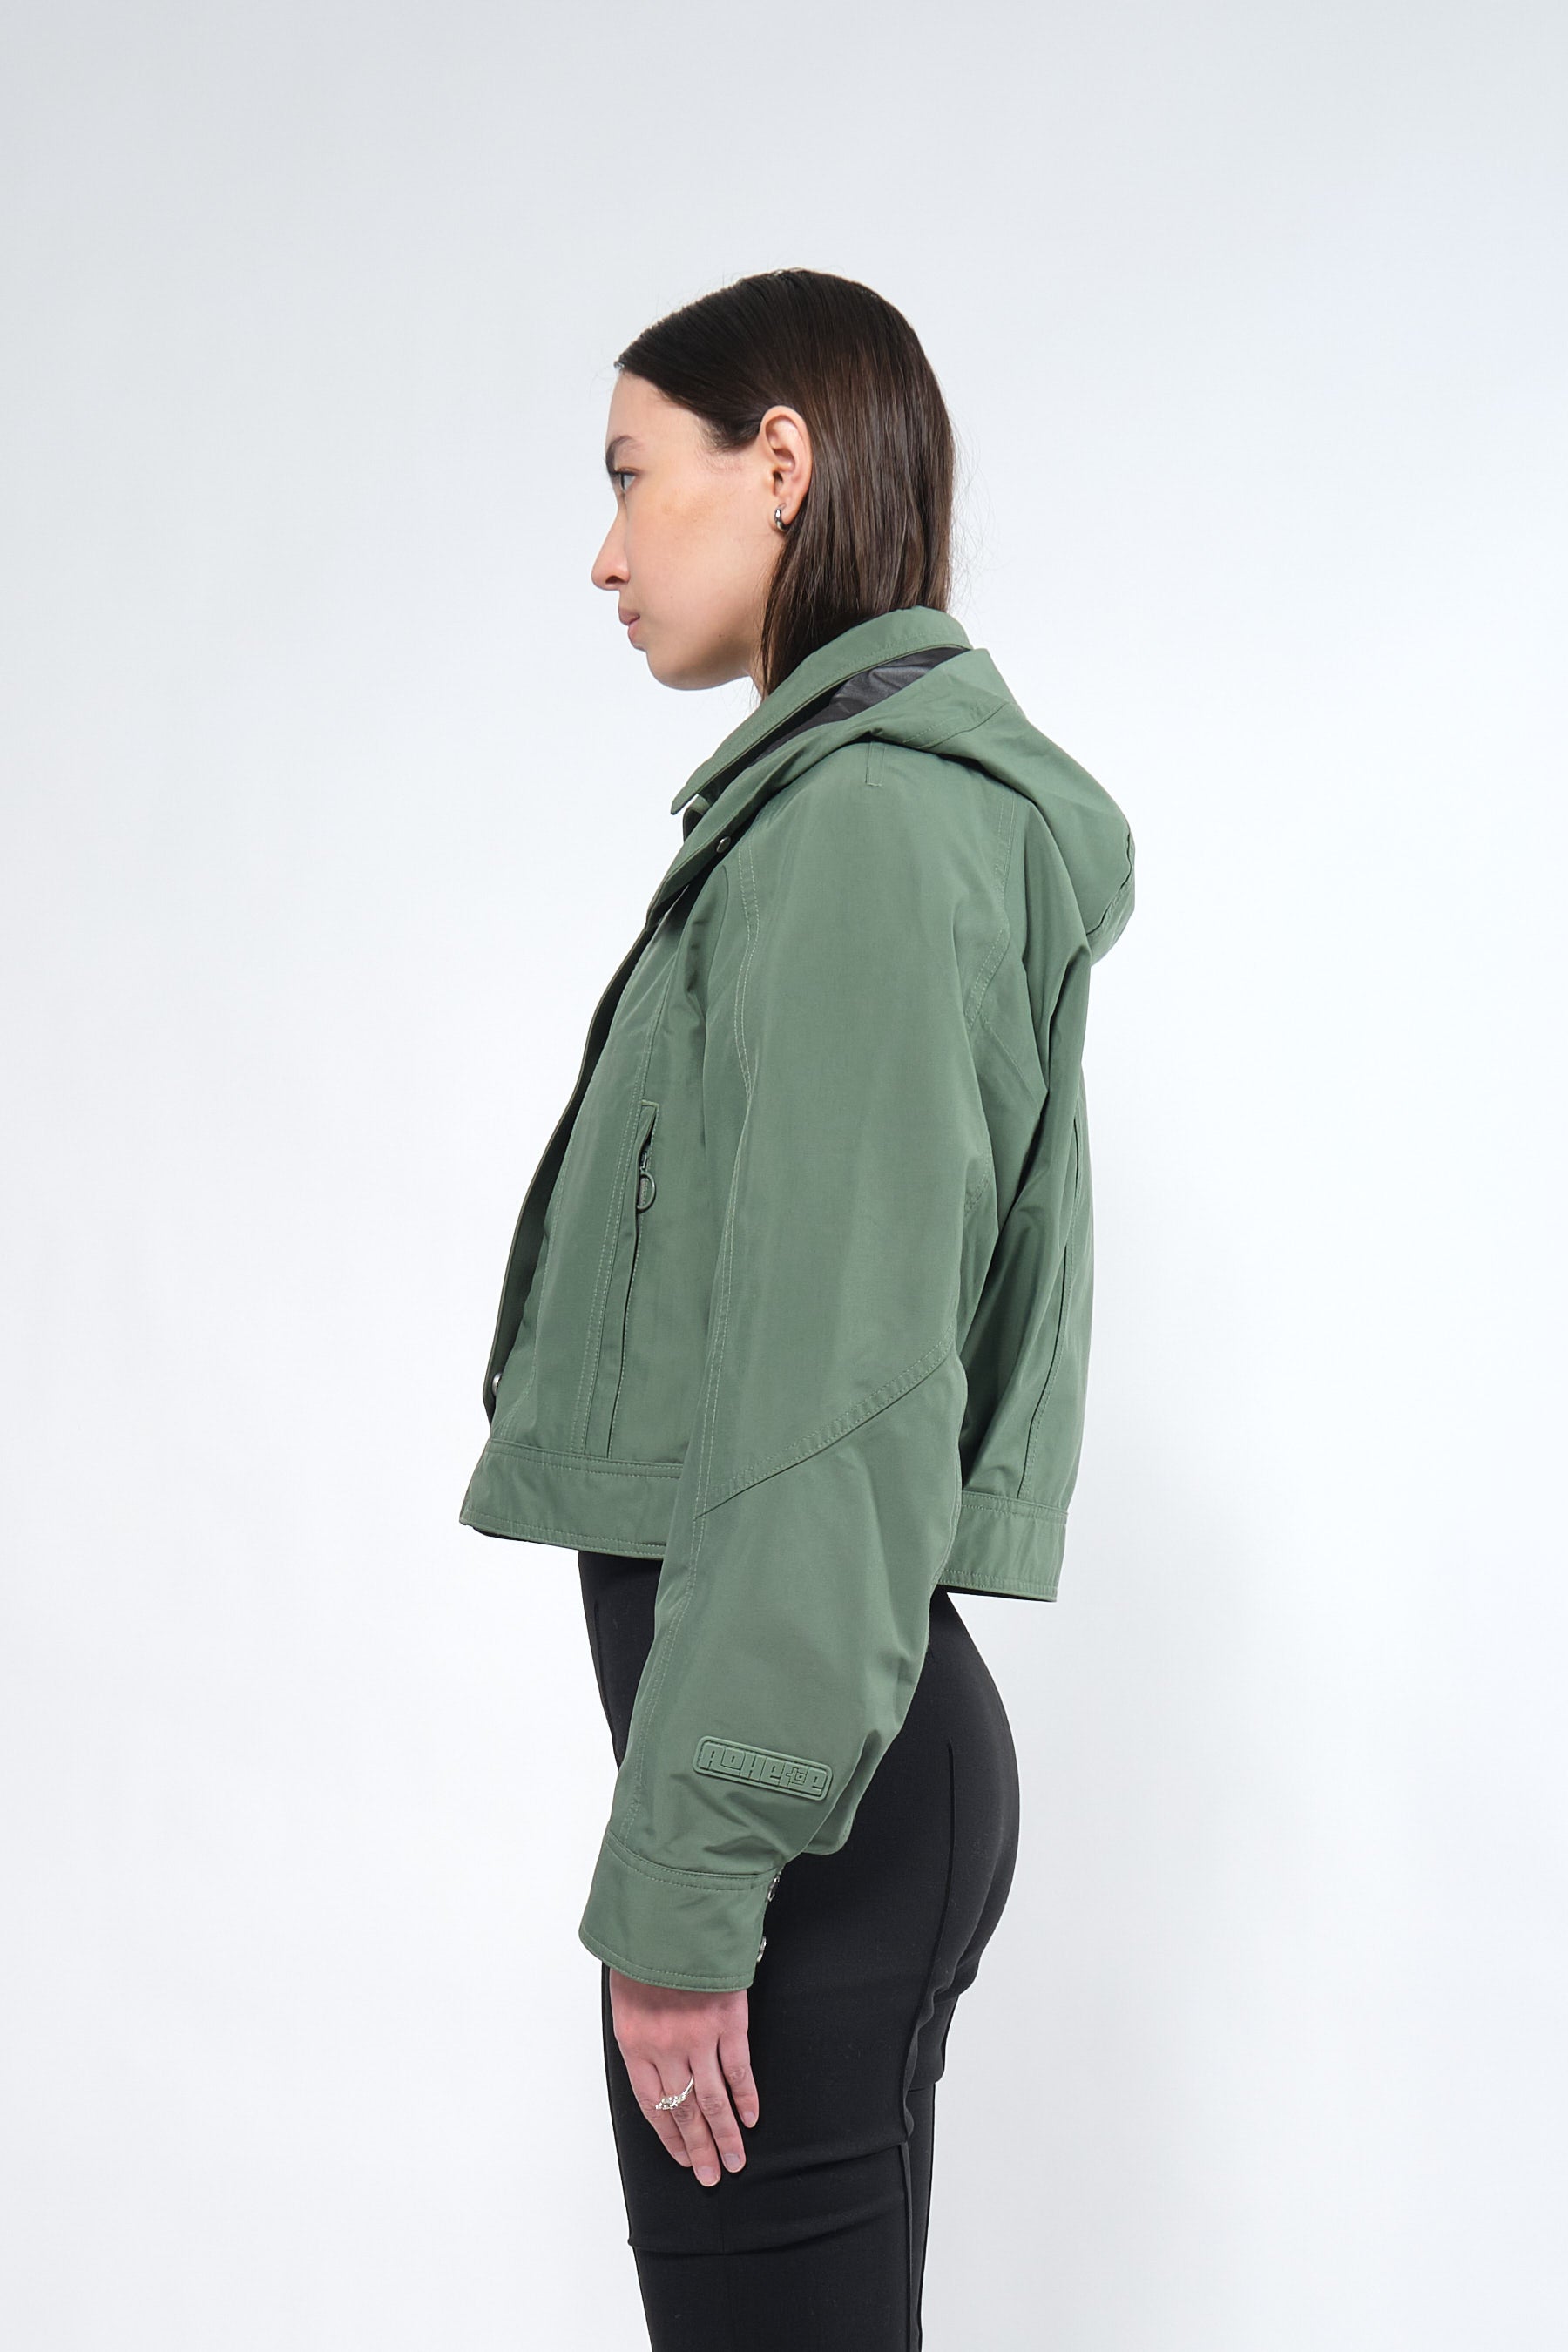  3L Green Waterproof Crop Rain Jacket with Hood - Adhere To  - 6